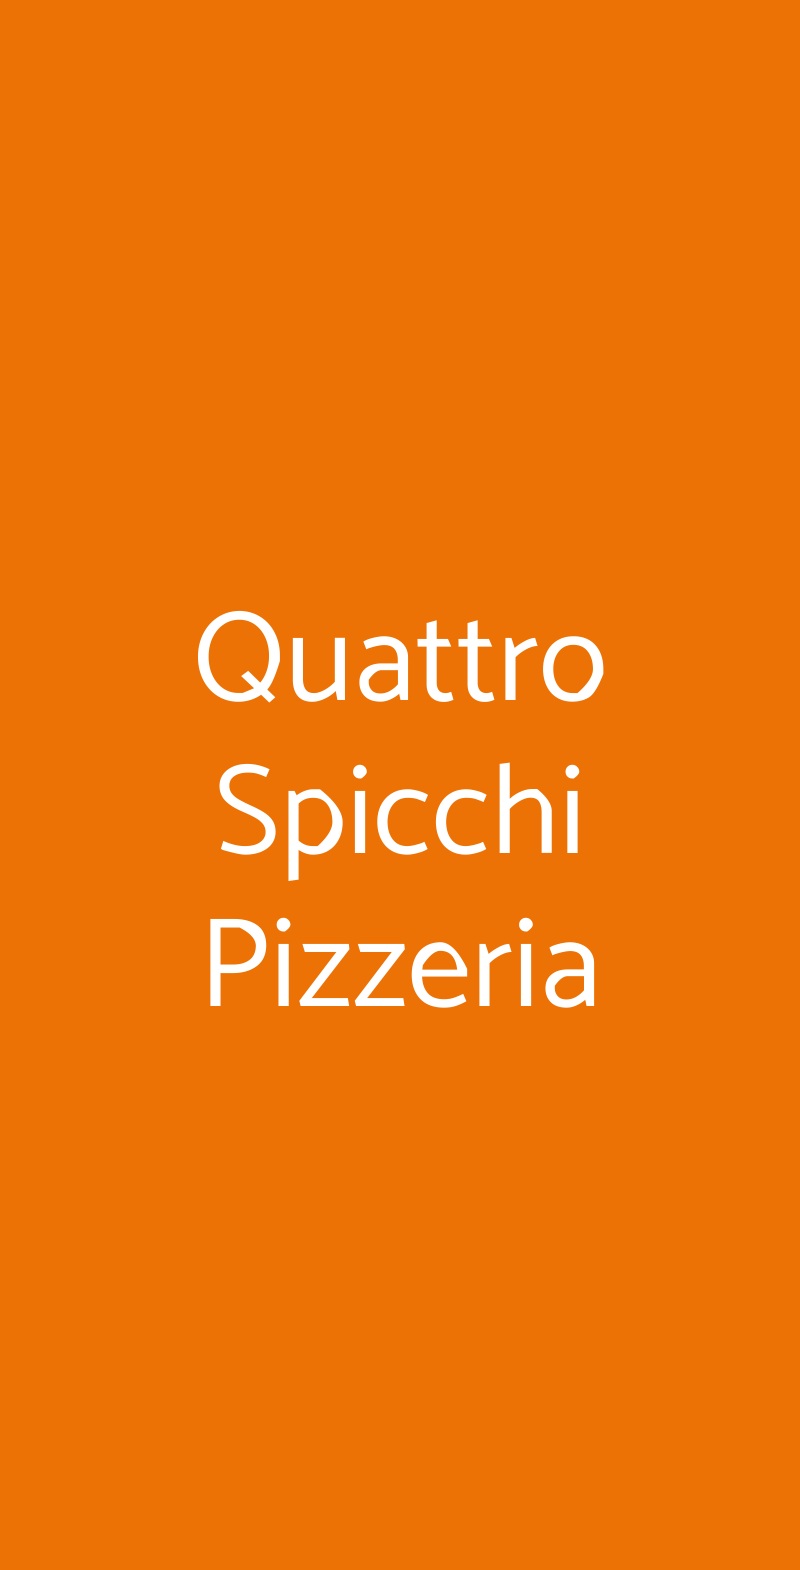 Quattro Spicchi Pizzeria Roma menù 1 pagina